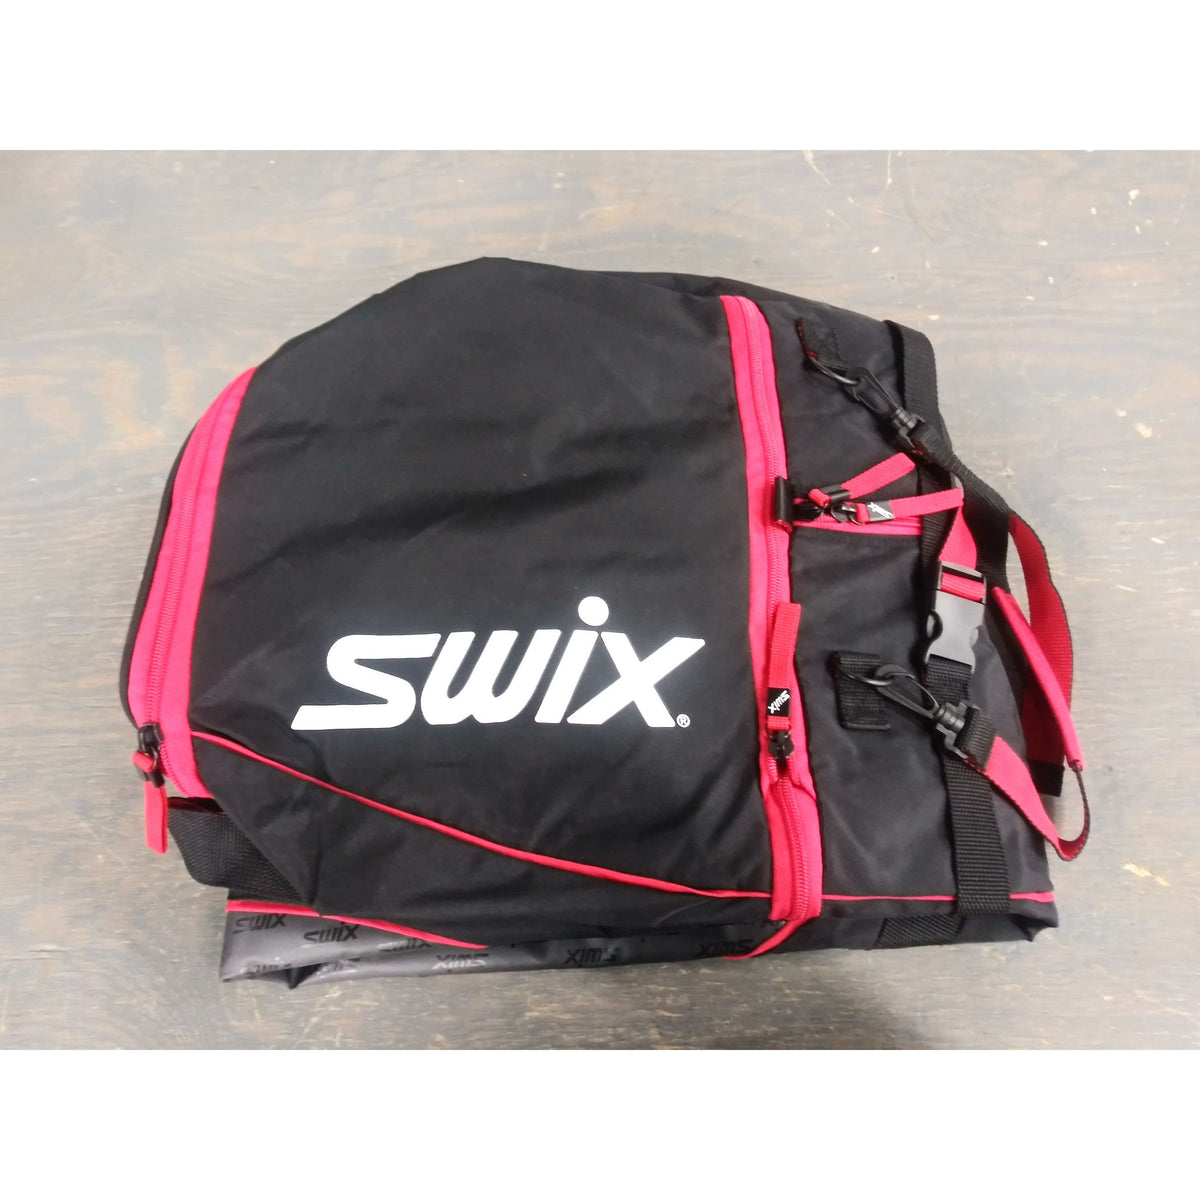 Swix Universal Ski Bag - Used - Acceptable